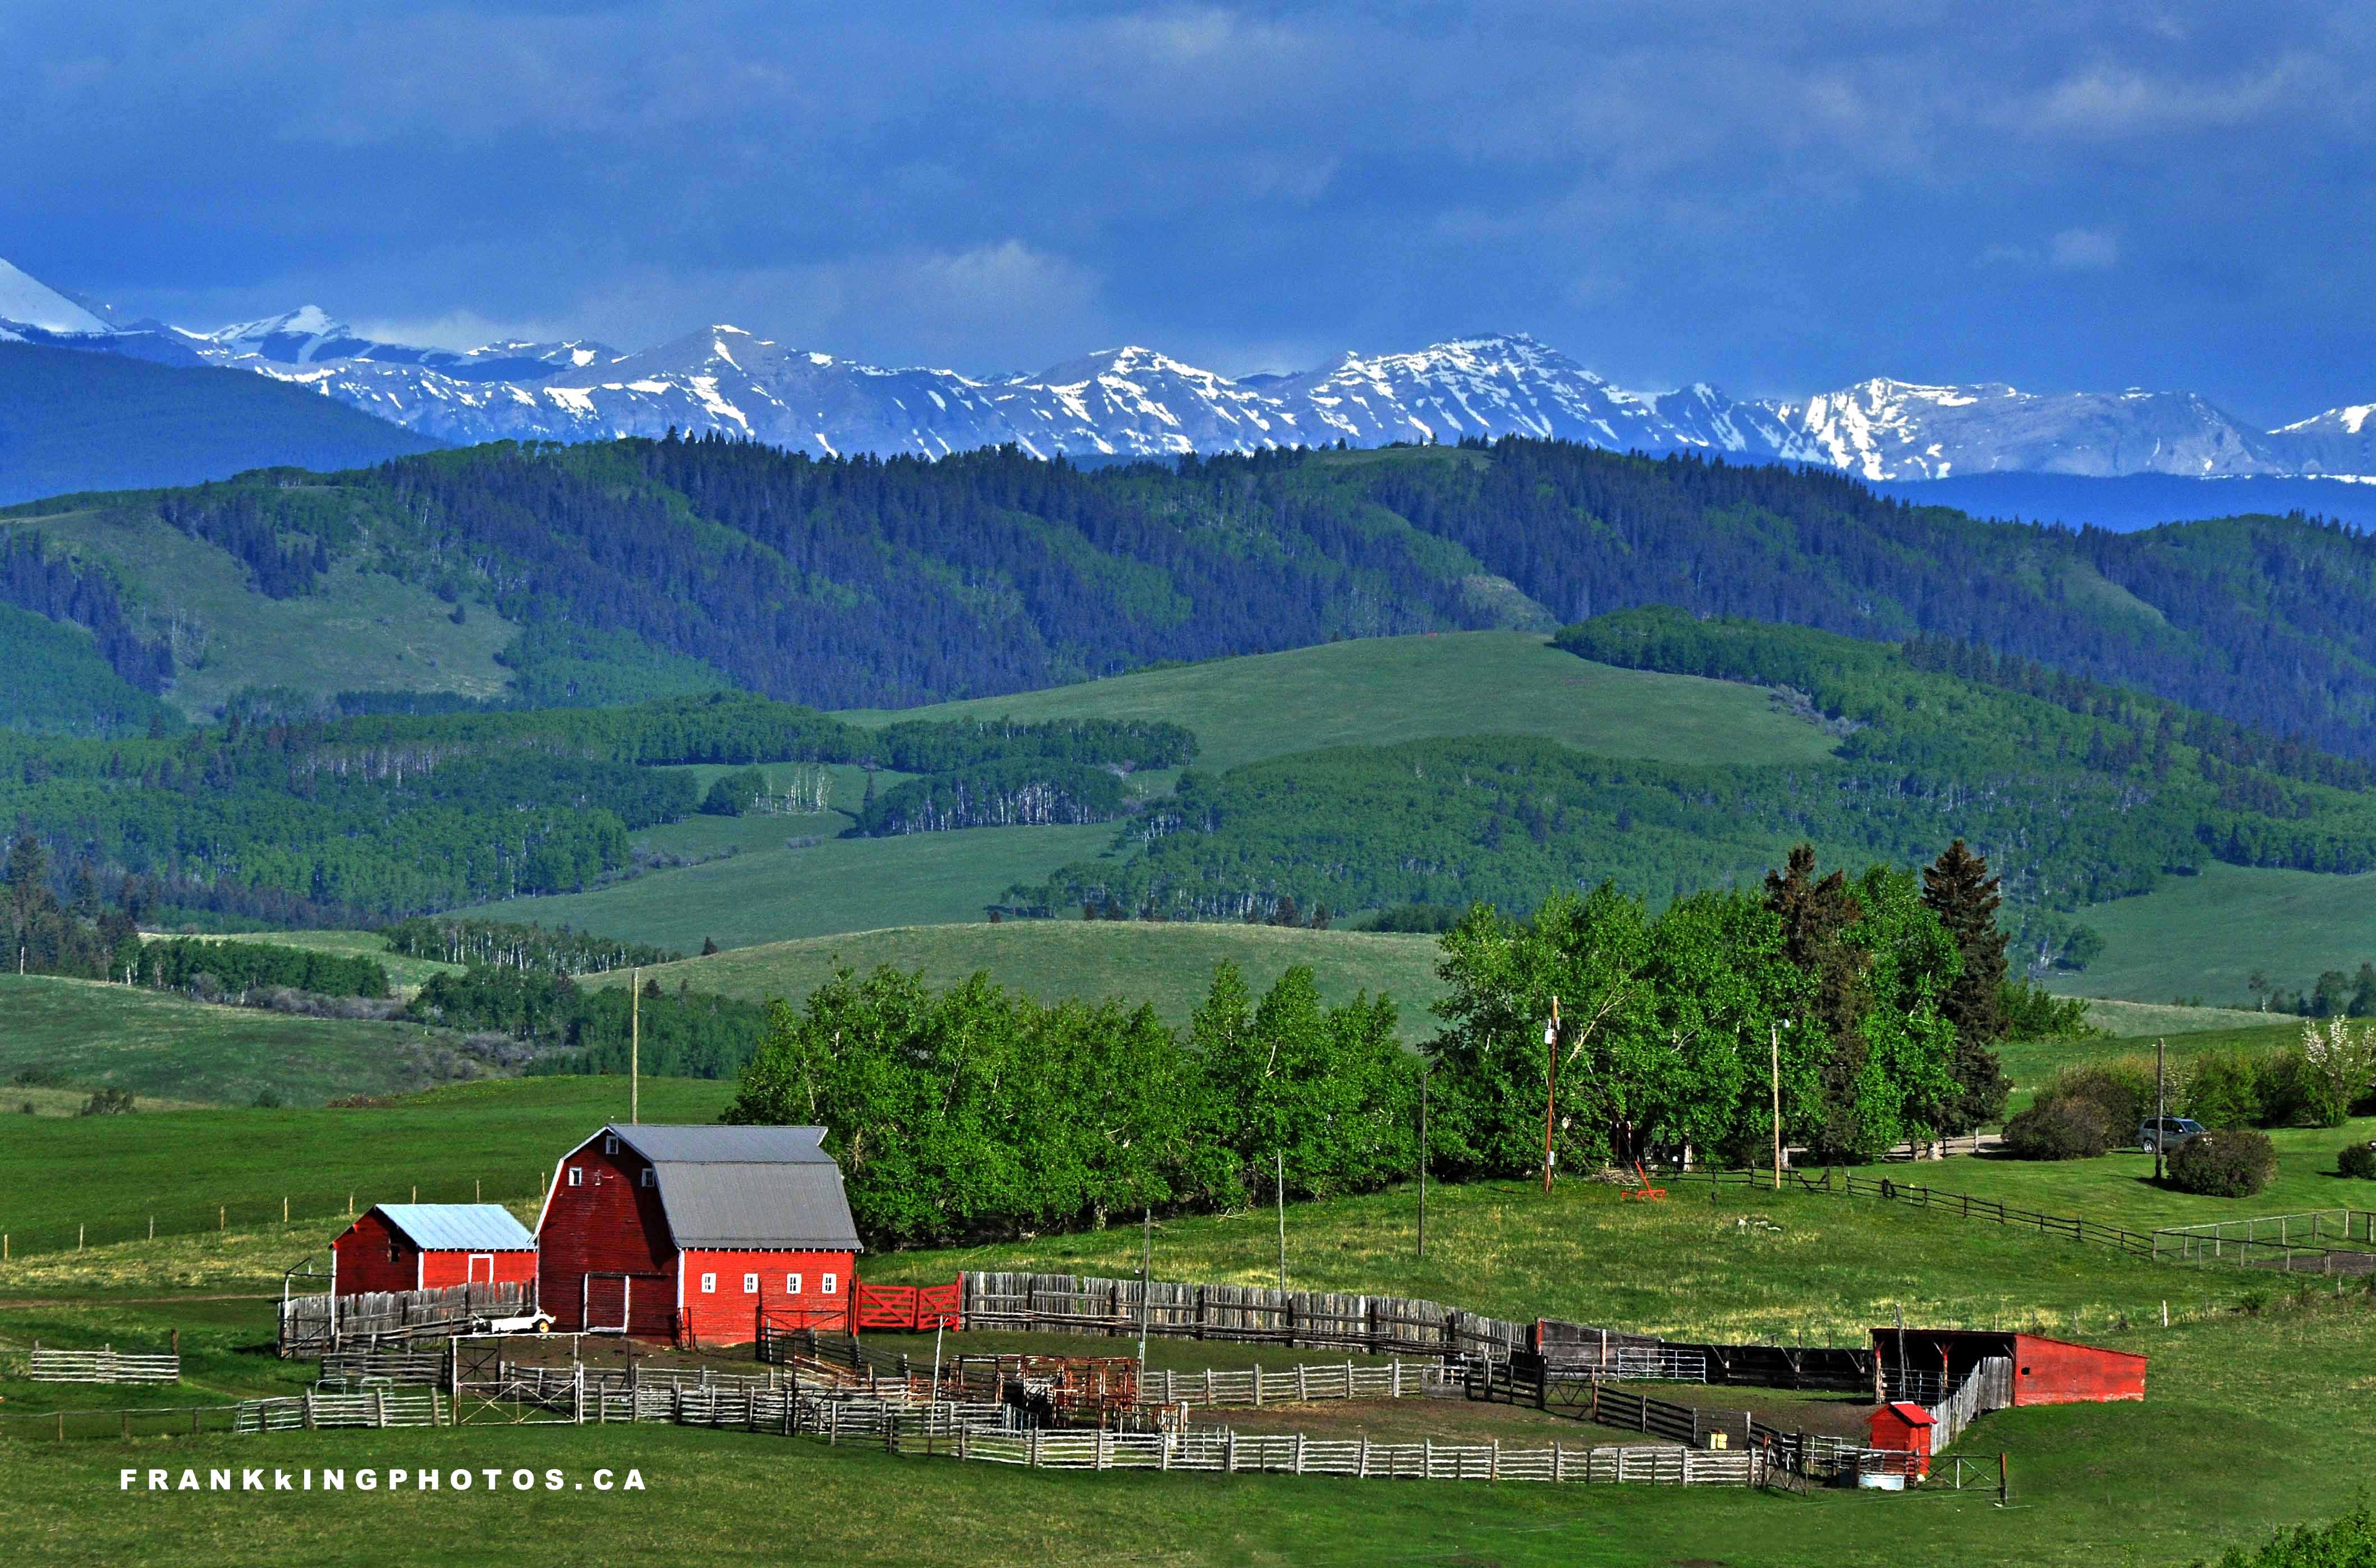 Rural landscapes: summer in the foothills | FRANK KING PHOTOS